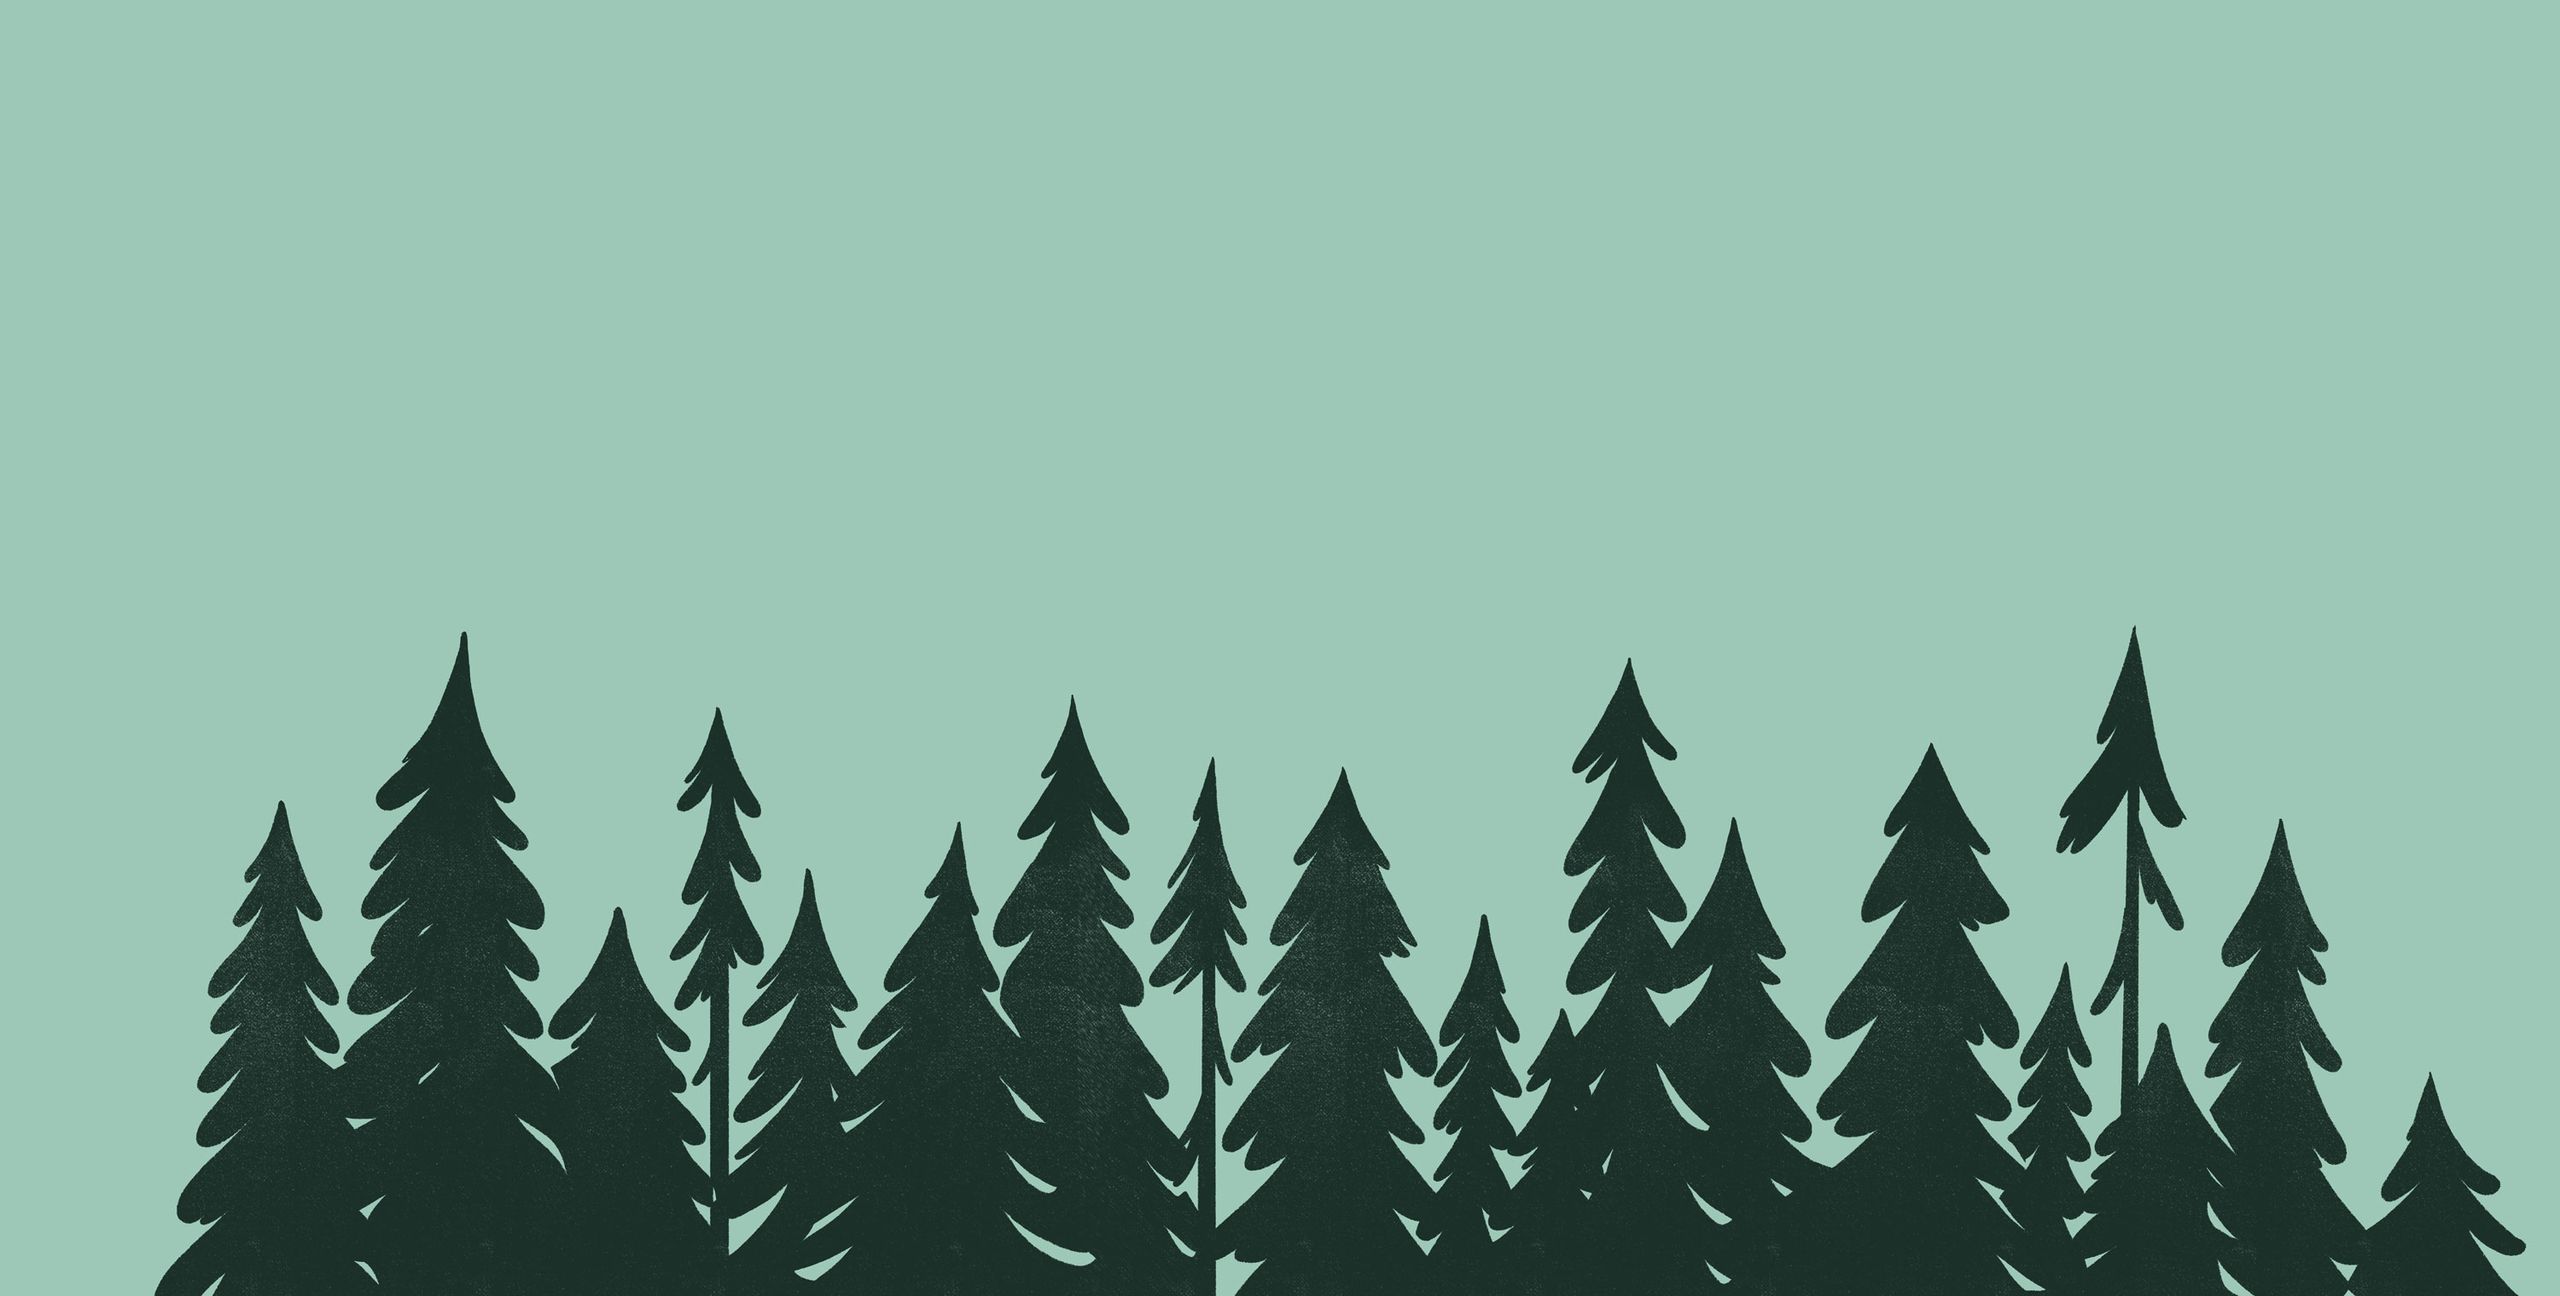 Row of trees illustration